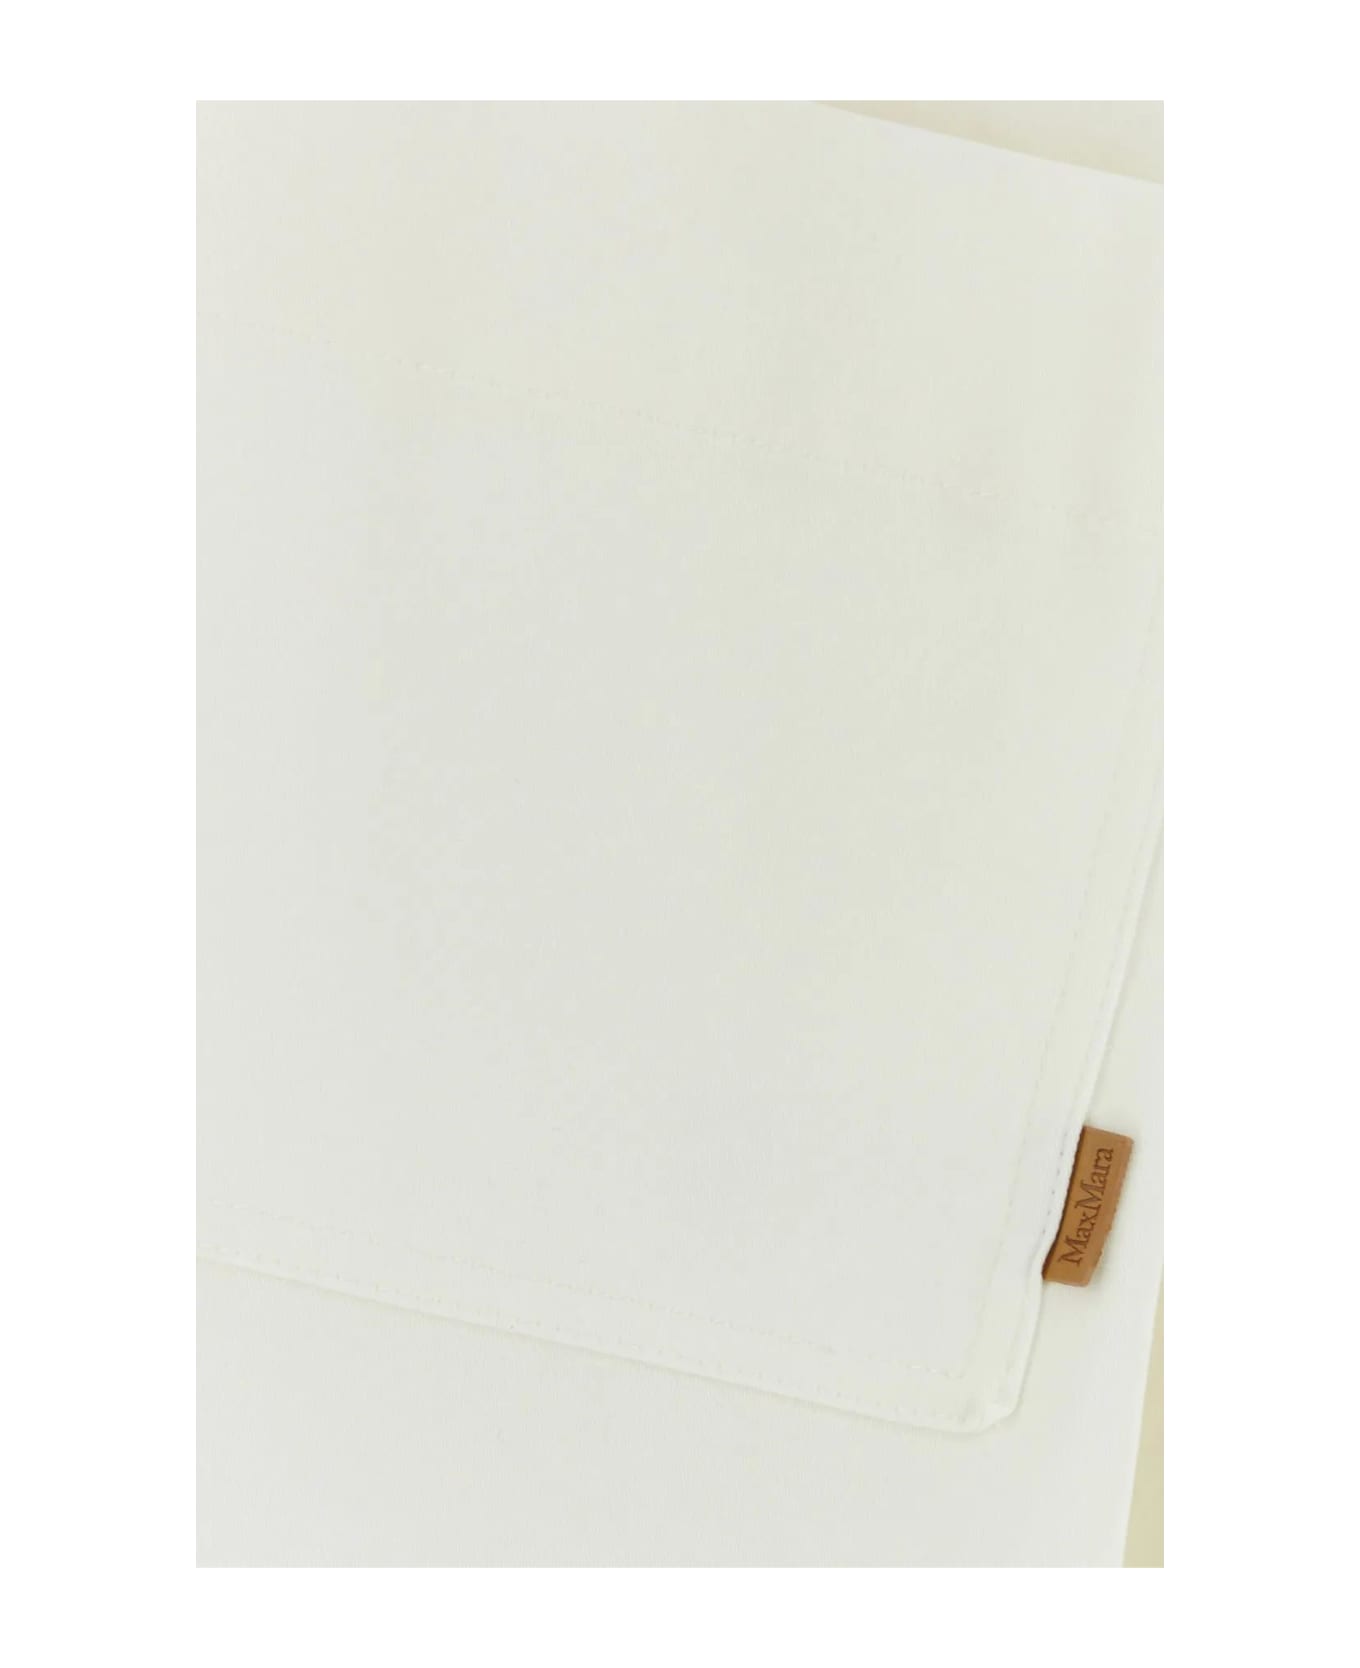 Max Mara White Stretch Cotton Adorato Blouse - White